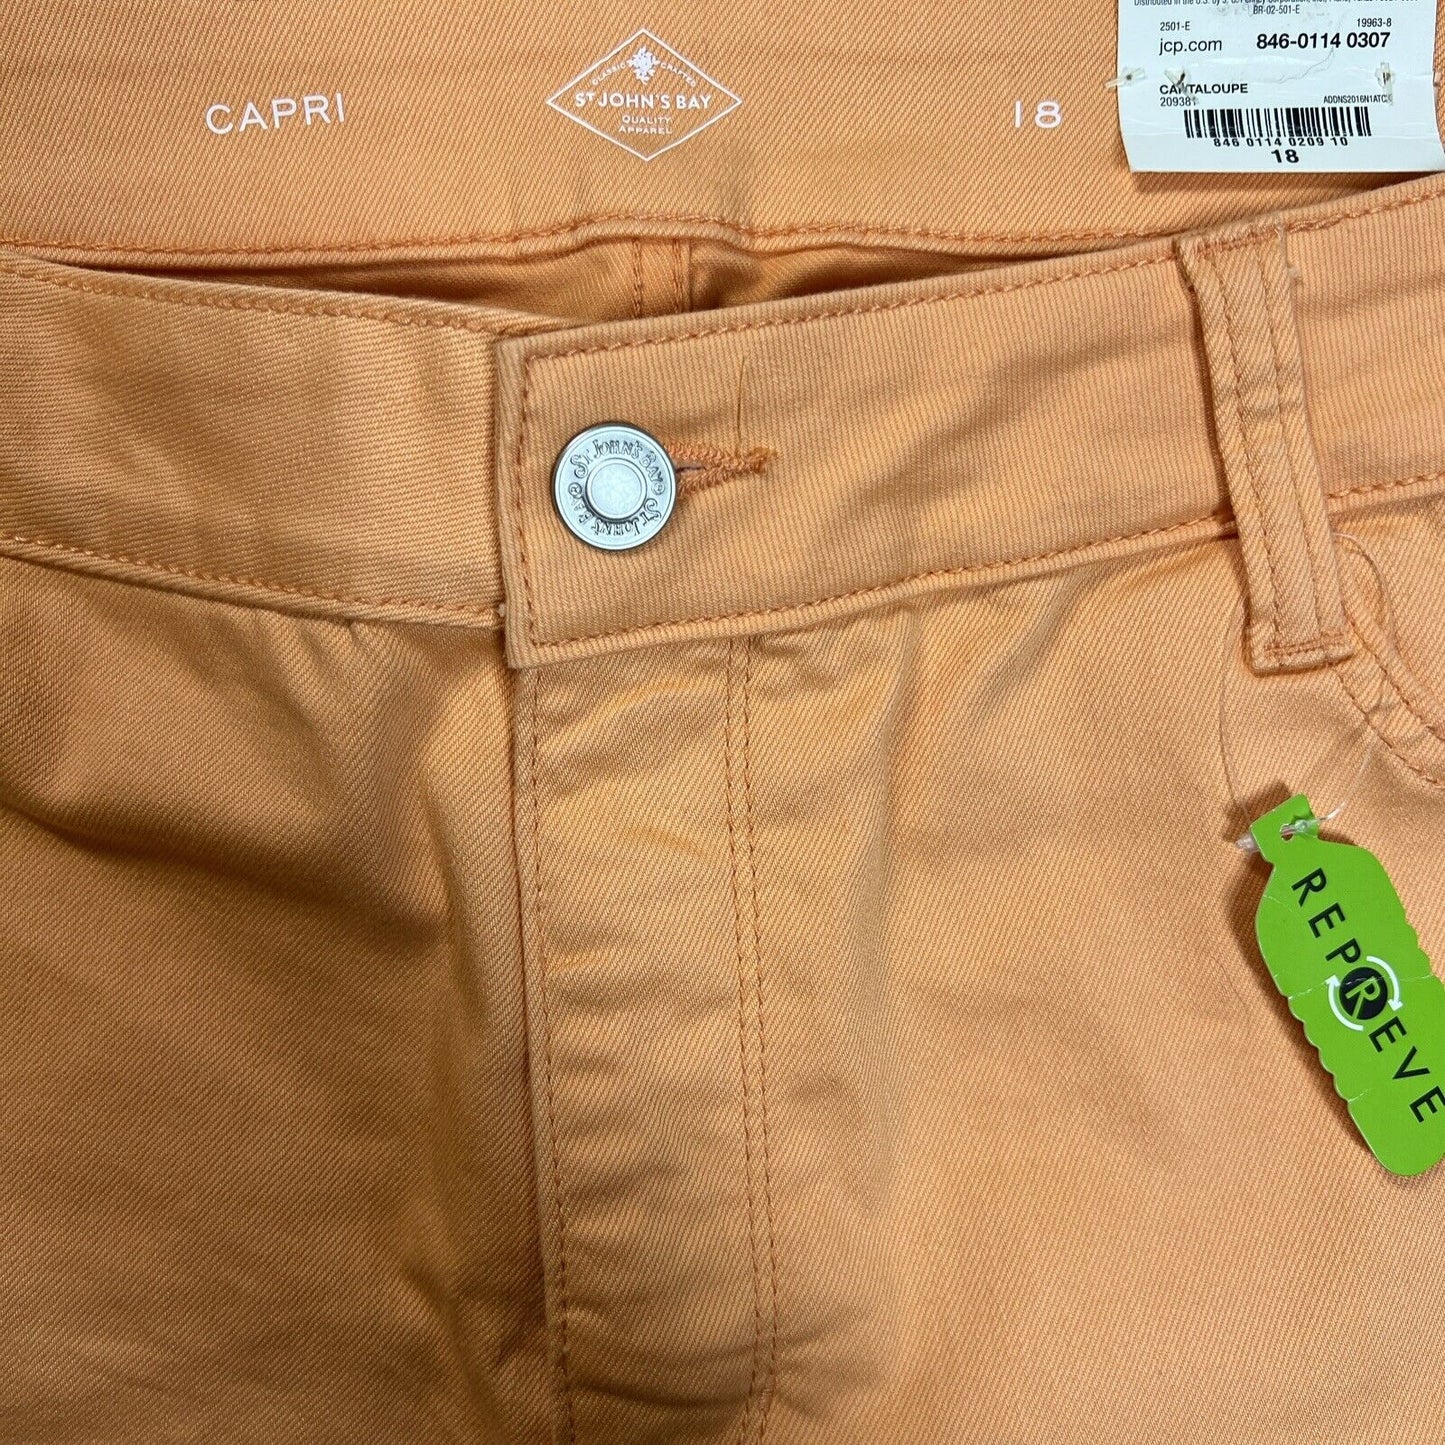 NEW St Johns Bay Women's Orange Mid Rise Capri Denim Jeans - 18